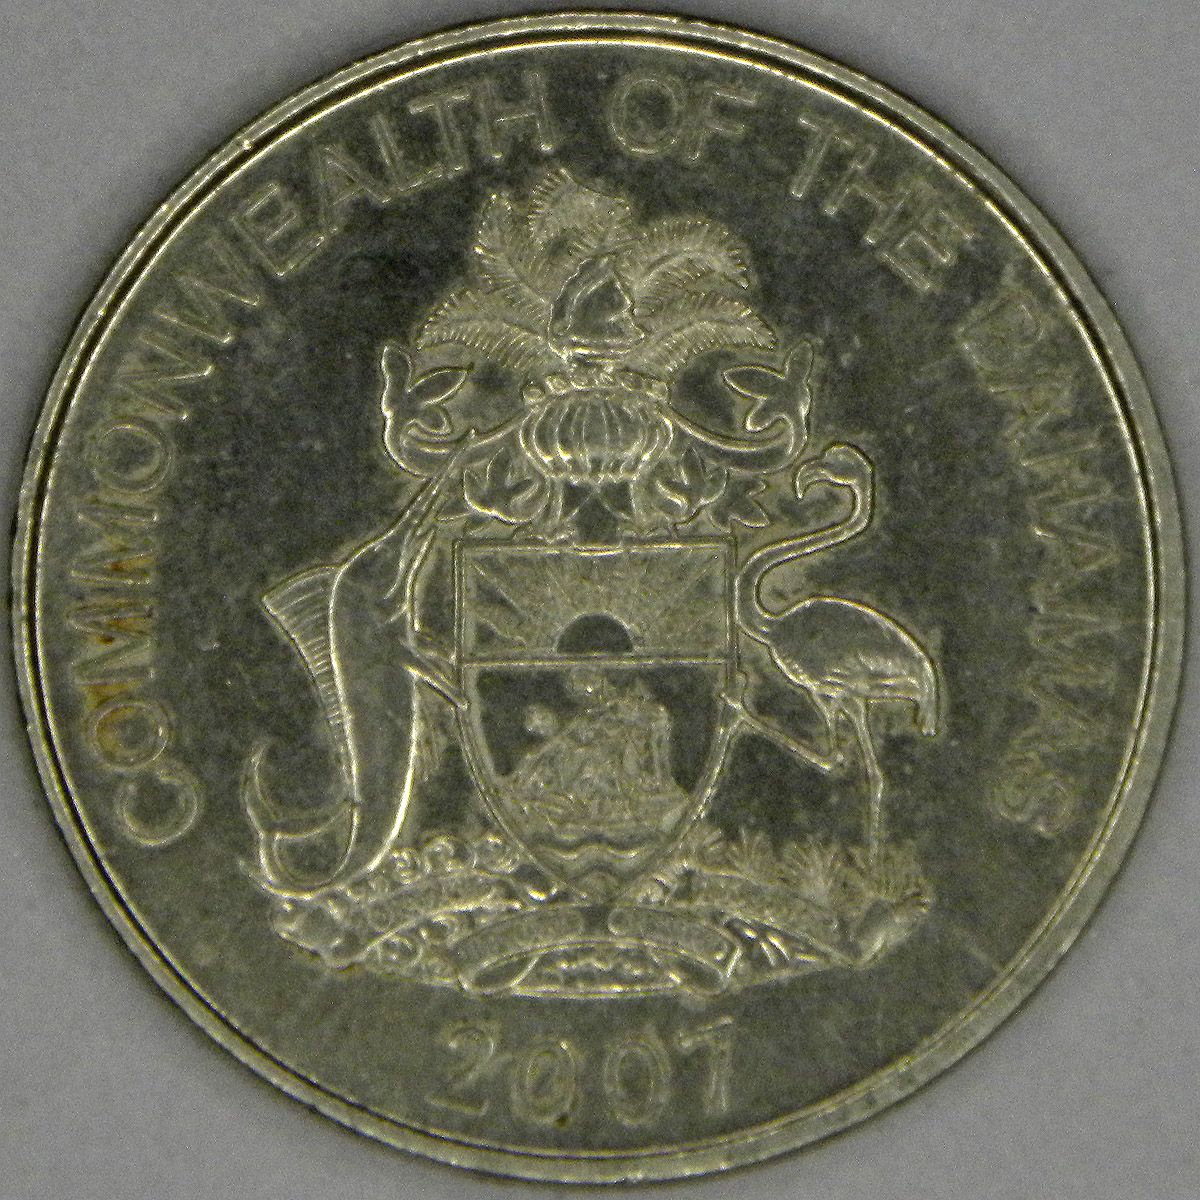 2007 Bahamas 25 cent coin (obverse)